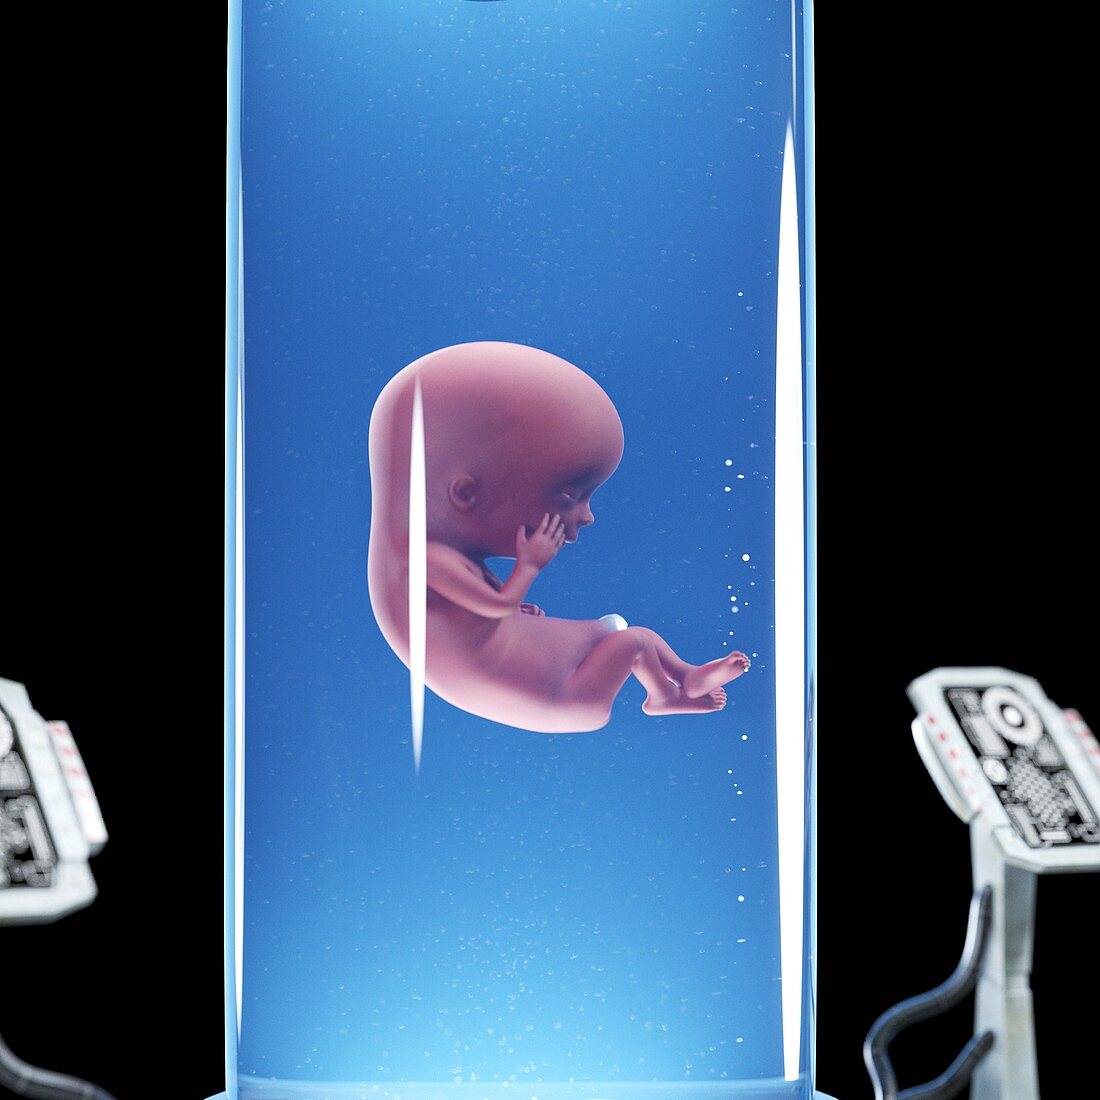 Fetus in a tank, illustration